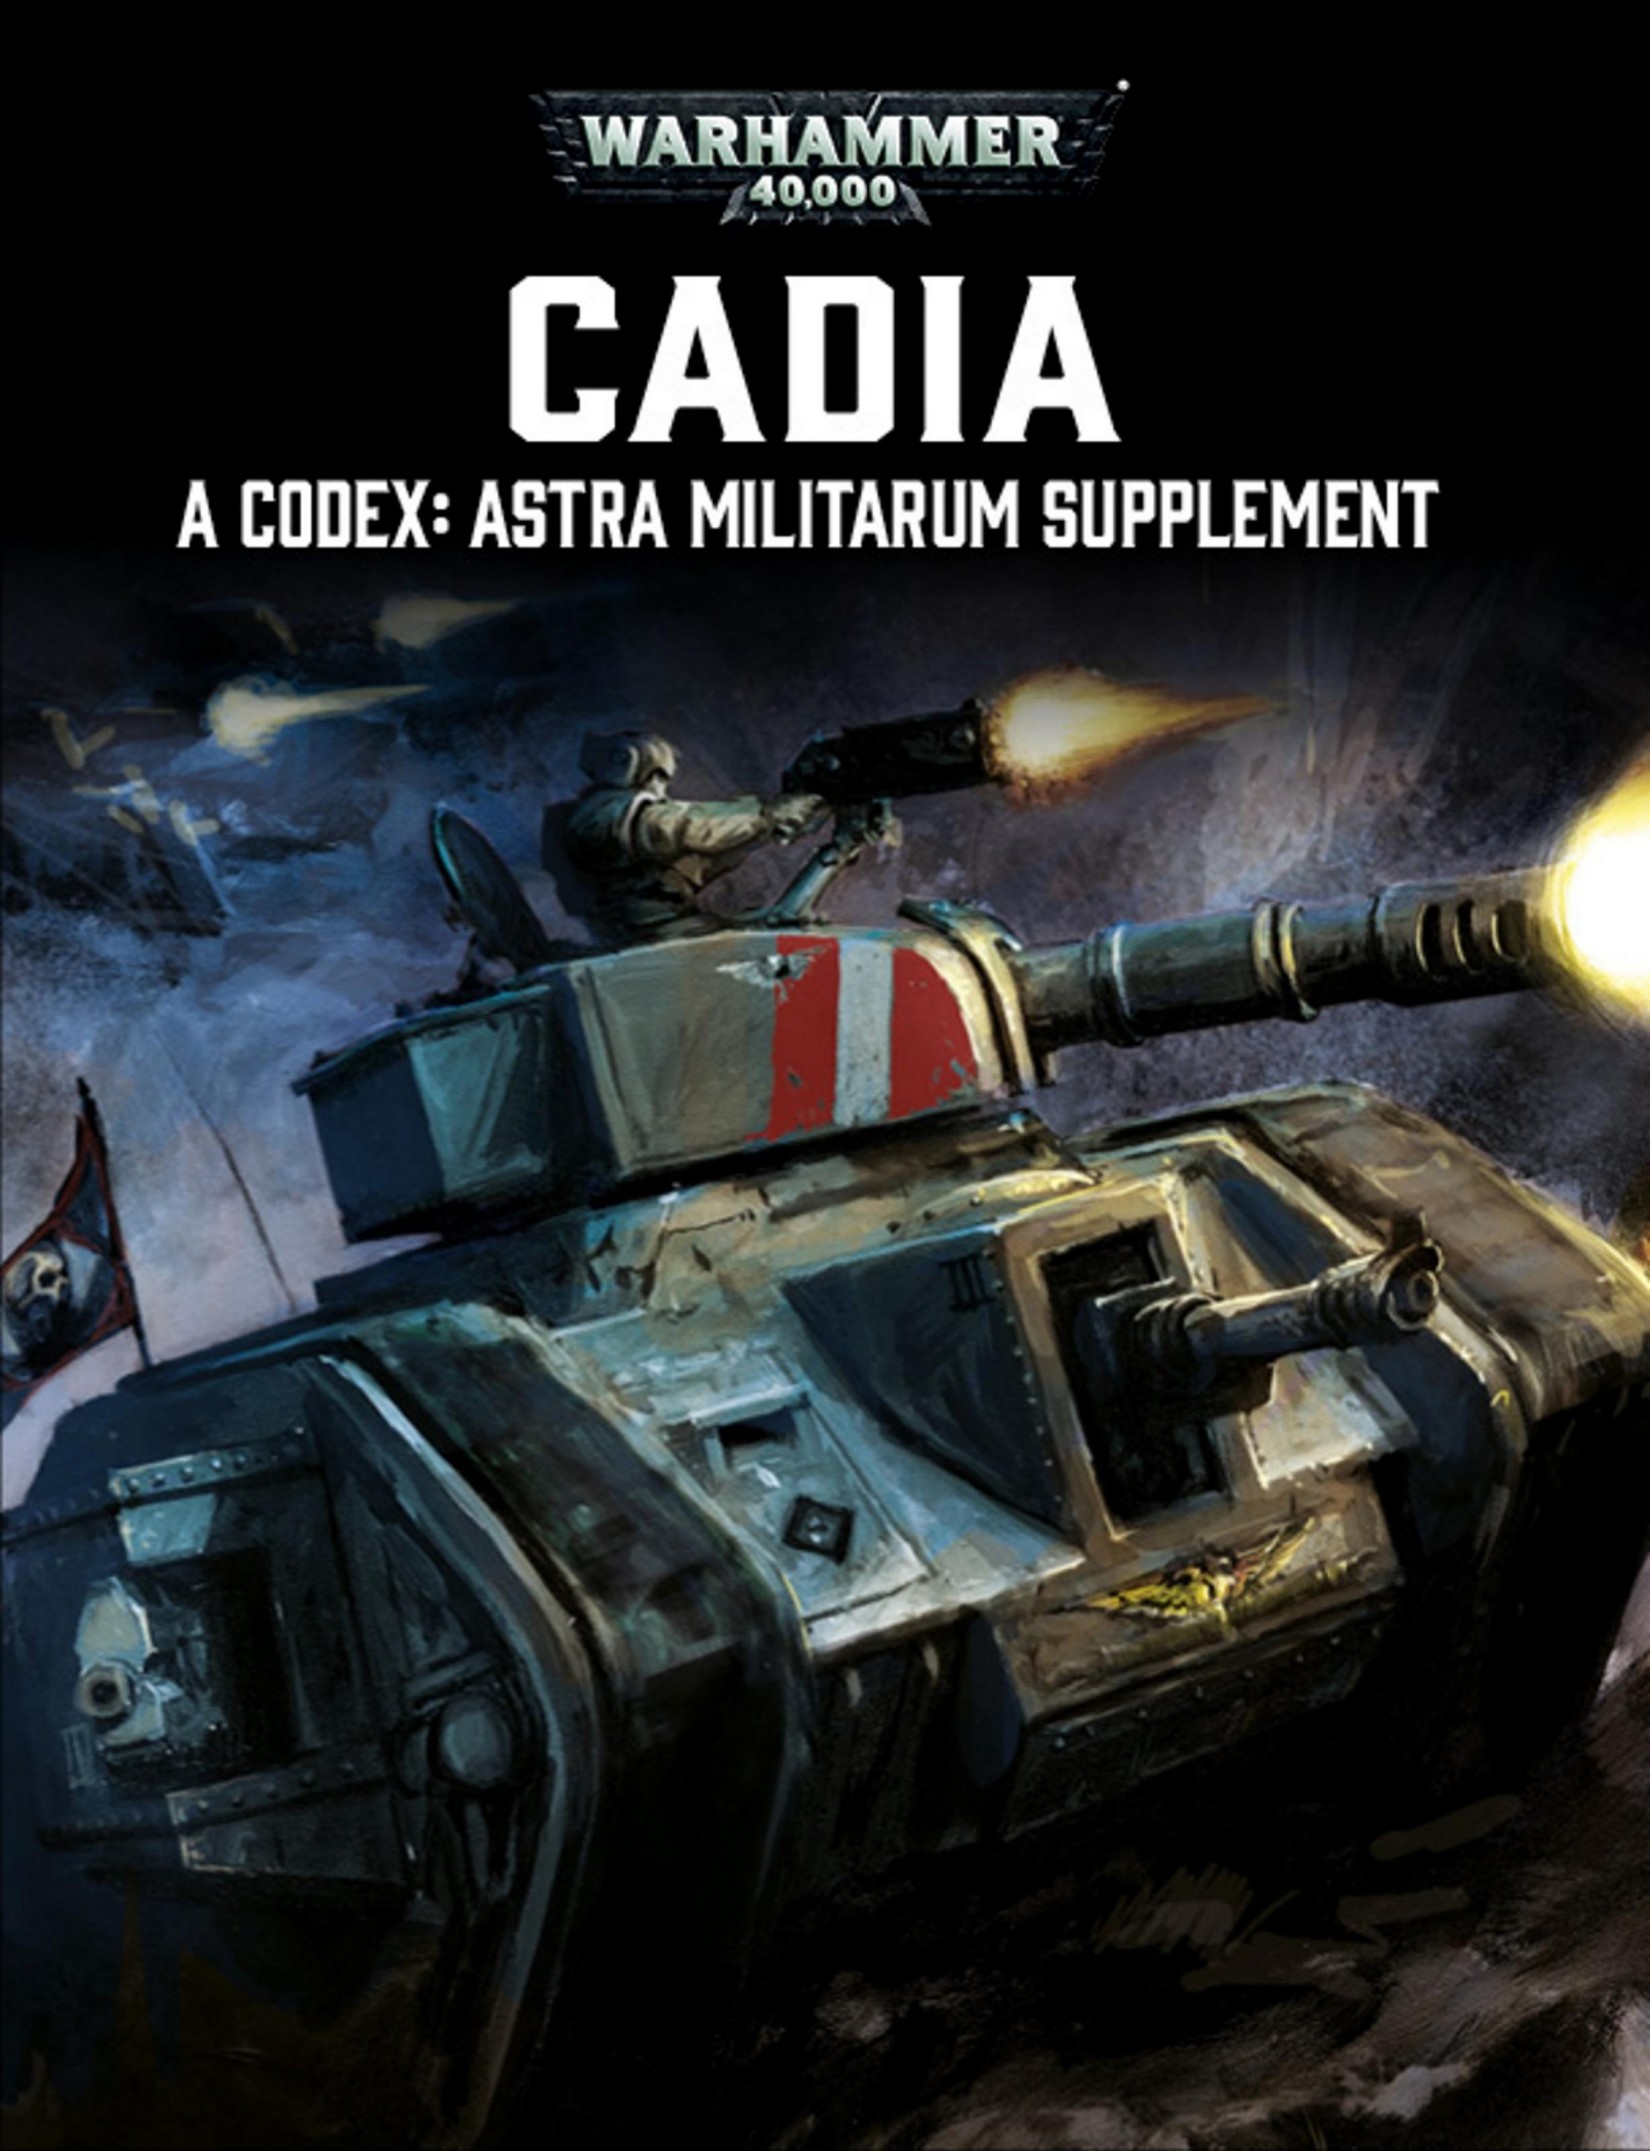 Warhammer 40.000: Codex - Astra Militarum - Cadia Supplement